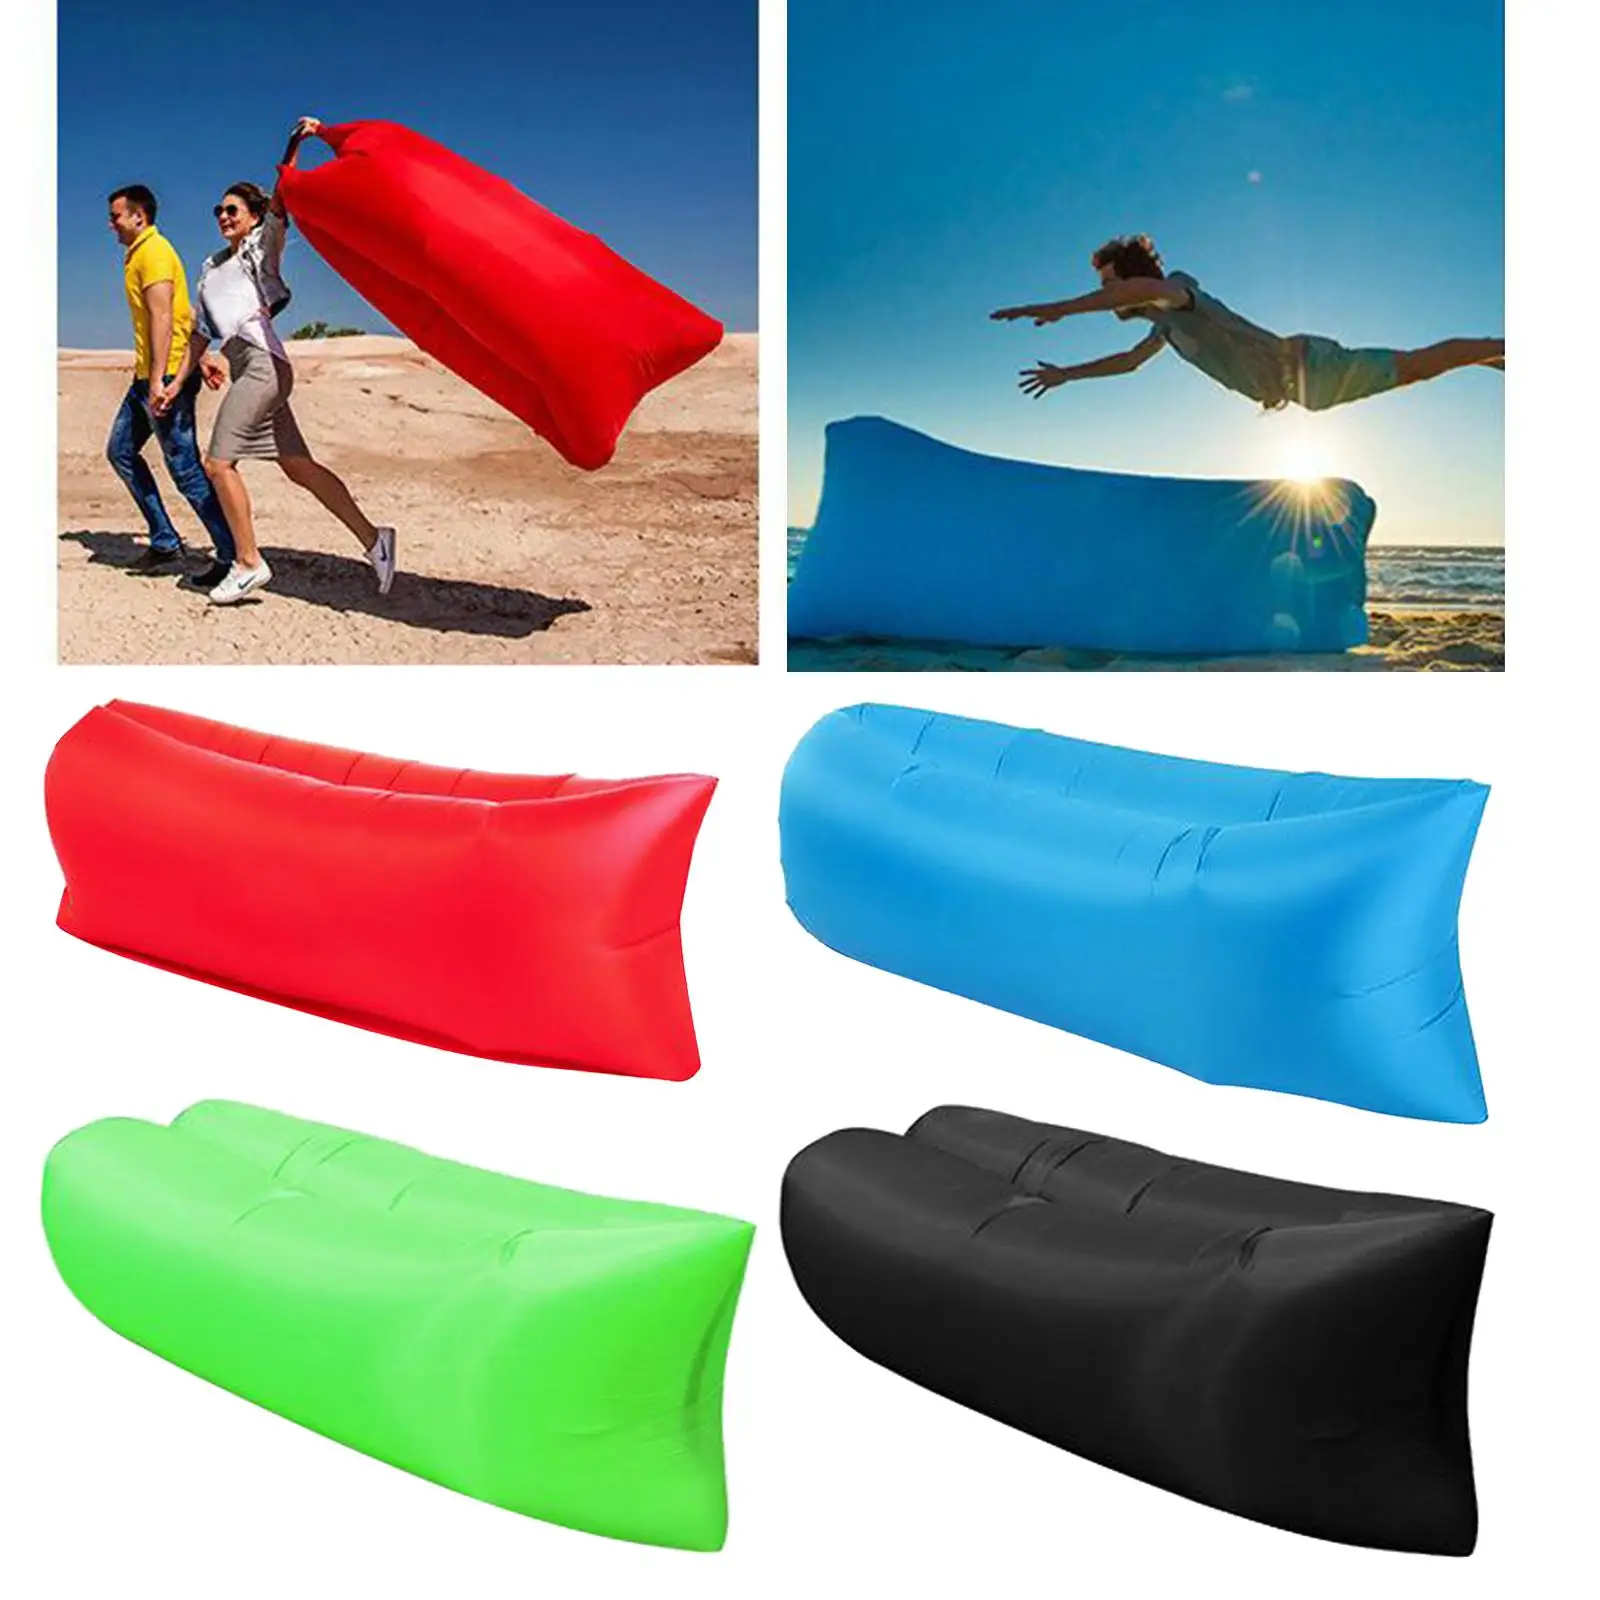 Inflatable Lounger Outdoor Sofa Hammock Bed Sleeping Bag for Camping, Park, Beach, Backyard, Fishing, Swimming, Pool